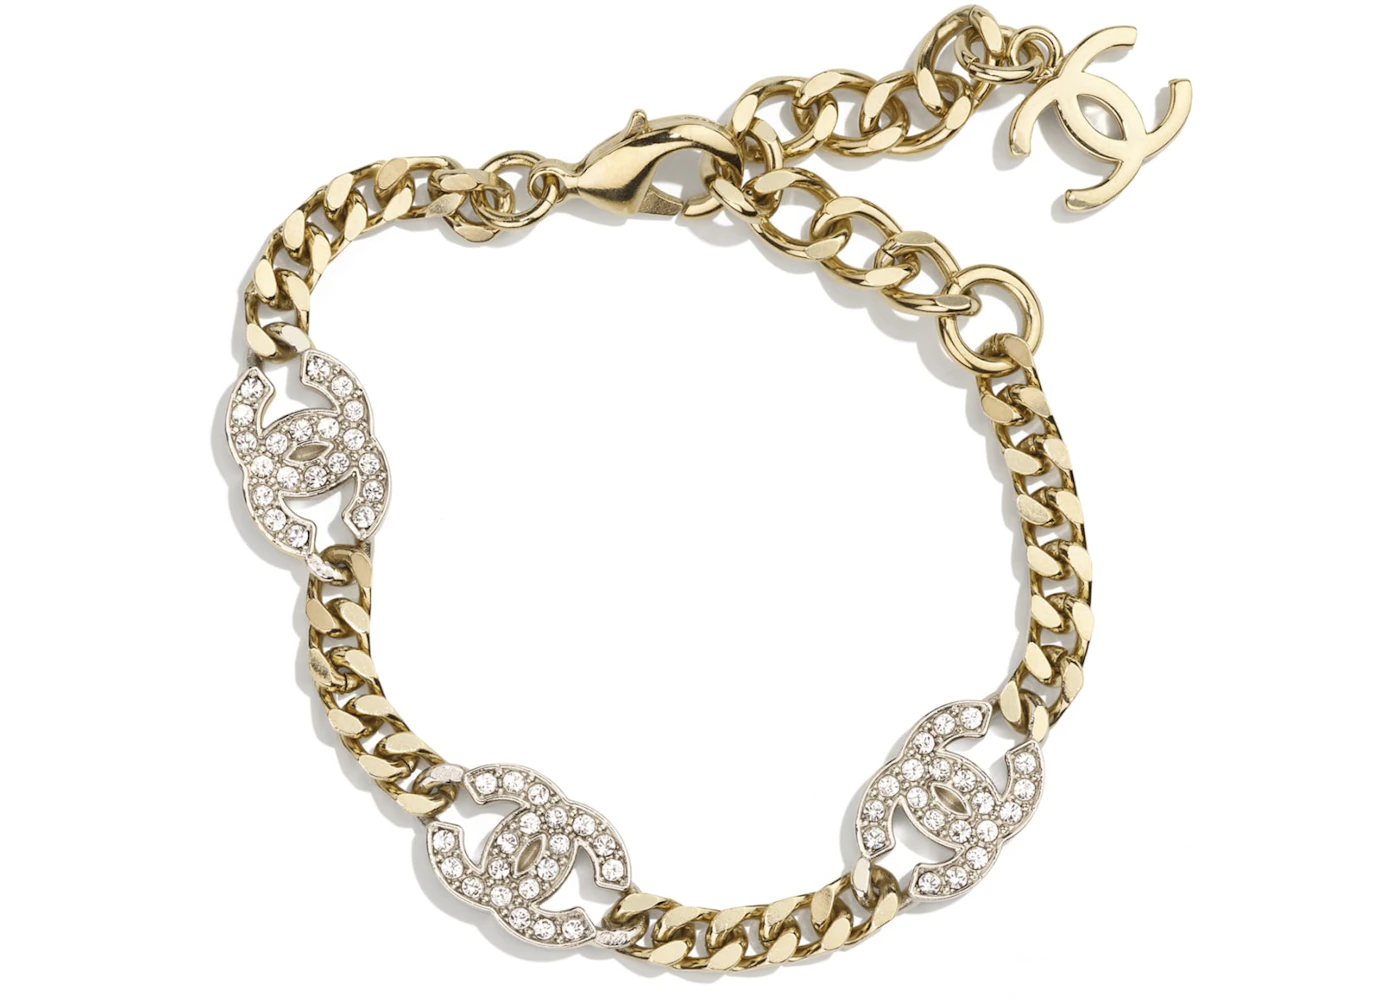 Chanel Interlocking Bracelet Gold/Silver/Crystal in Metal/Strass - US